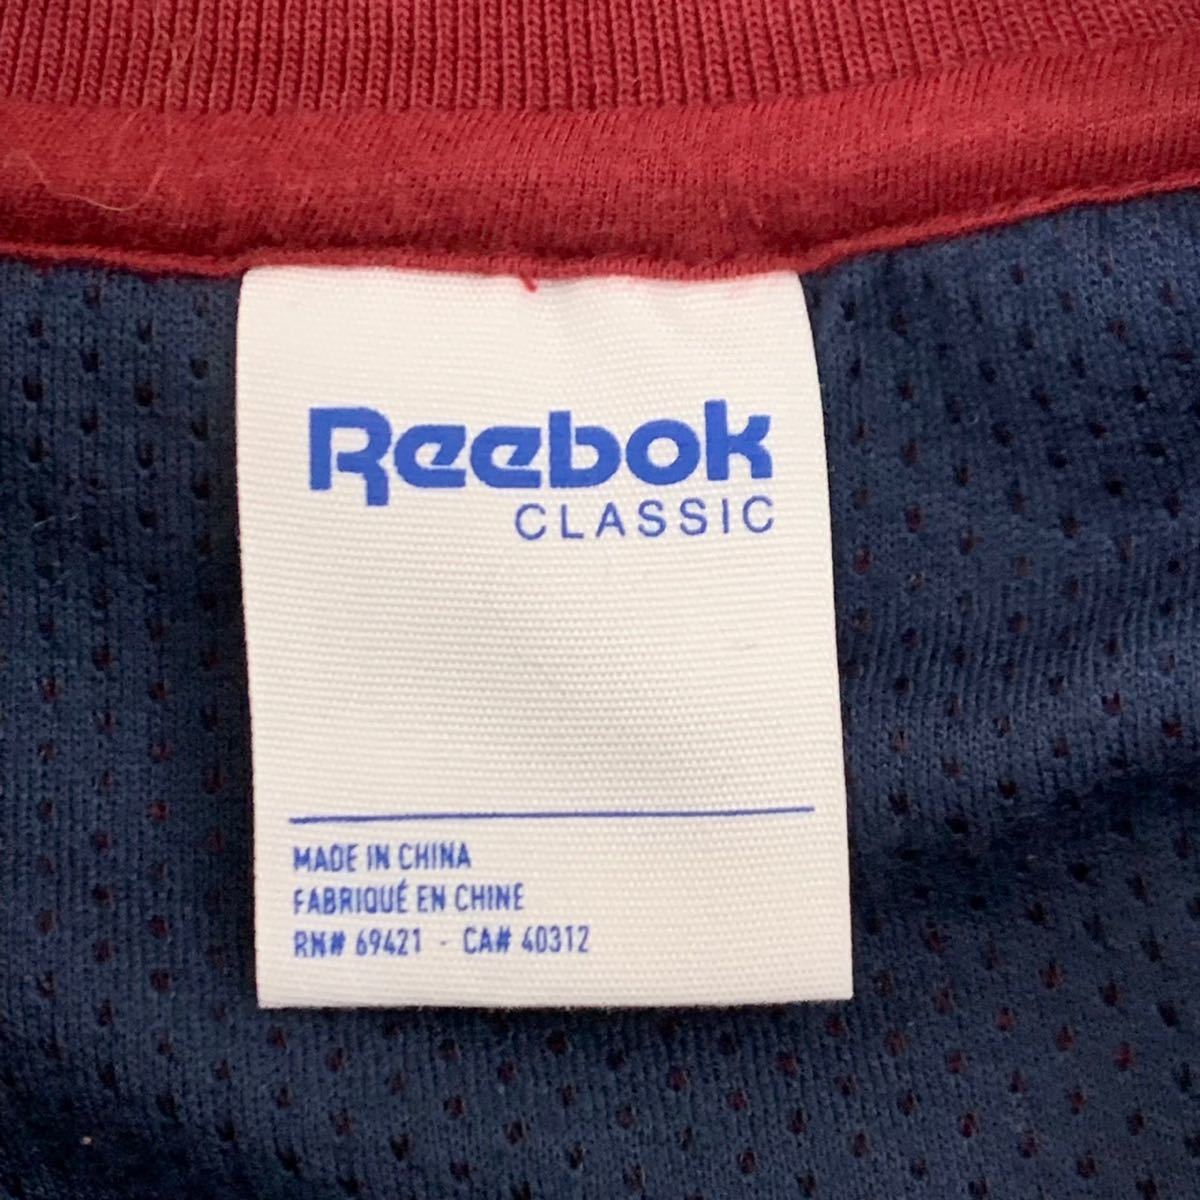 【Reebok】(リーボック) 刺繍トラックジャケット クラシック 古着